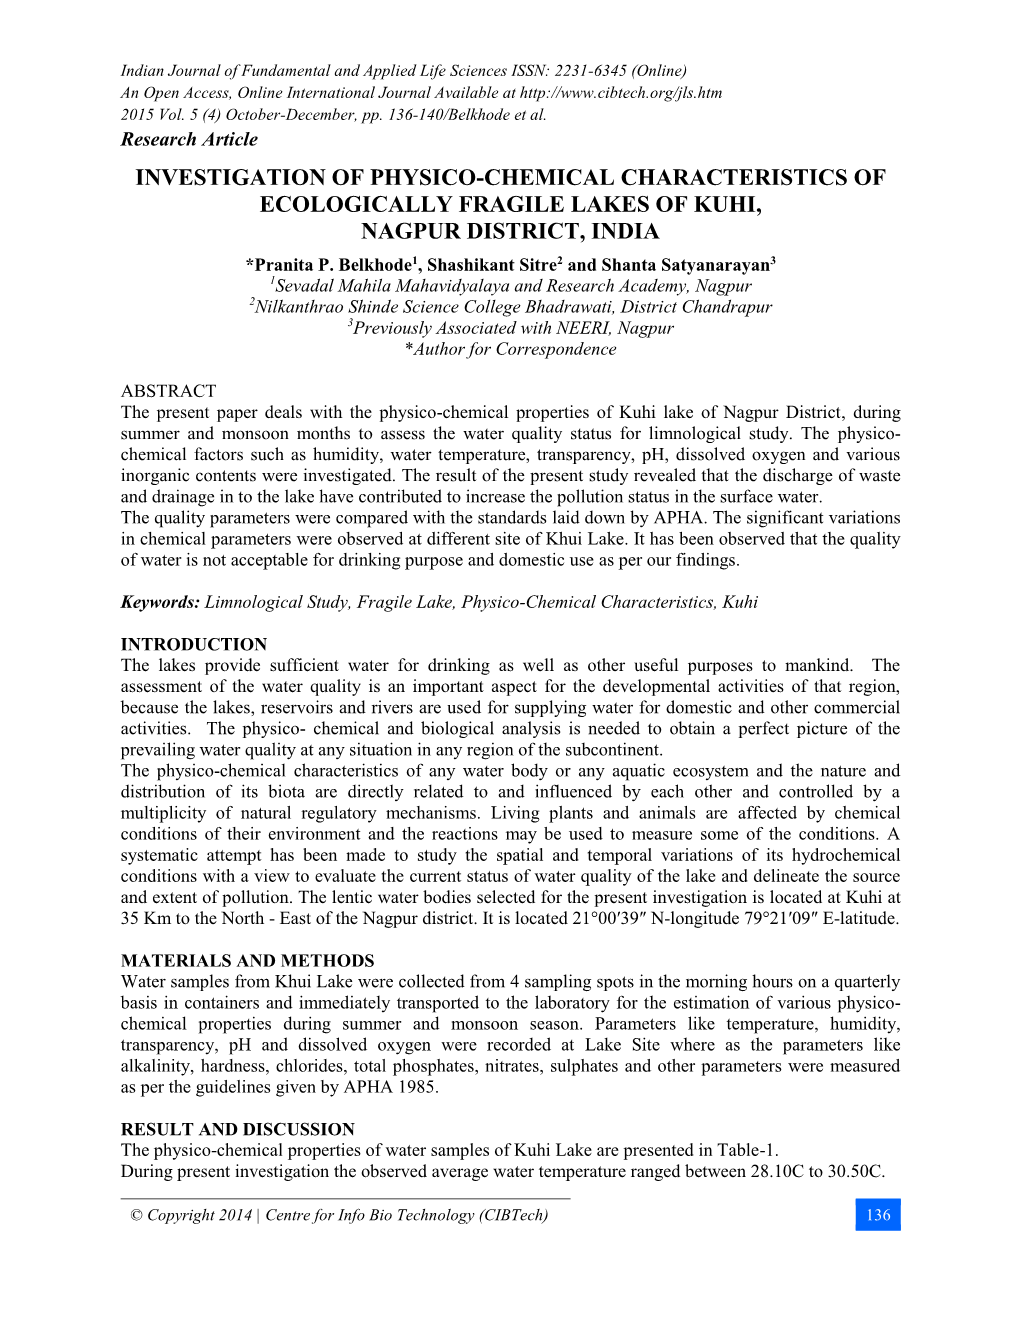 INVESTIGATION of PHYSICO-CHEMICAL CHARACTERISTICS of ECOLOGICALLY FRAGILE LAKES of KUHI, NAGPUR DISTRICT, INDIA *Pranita P